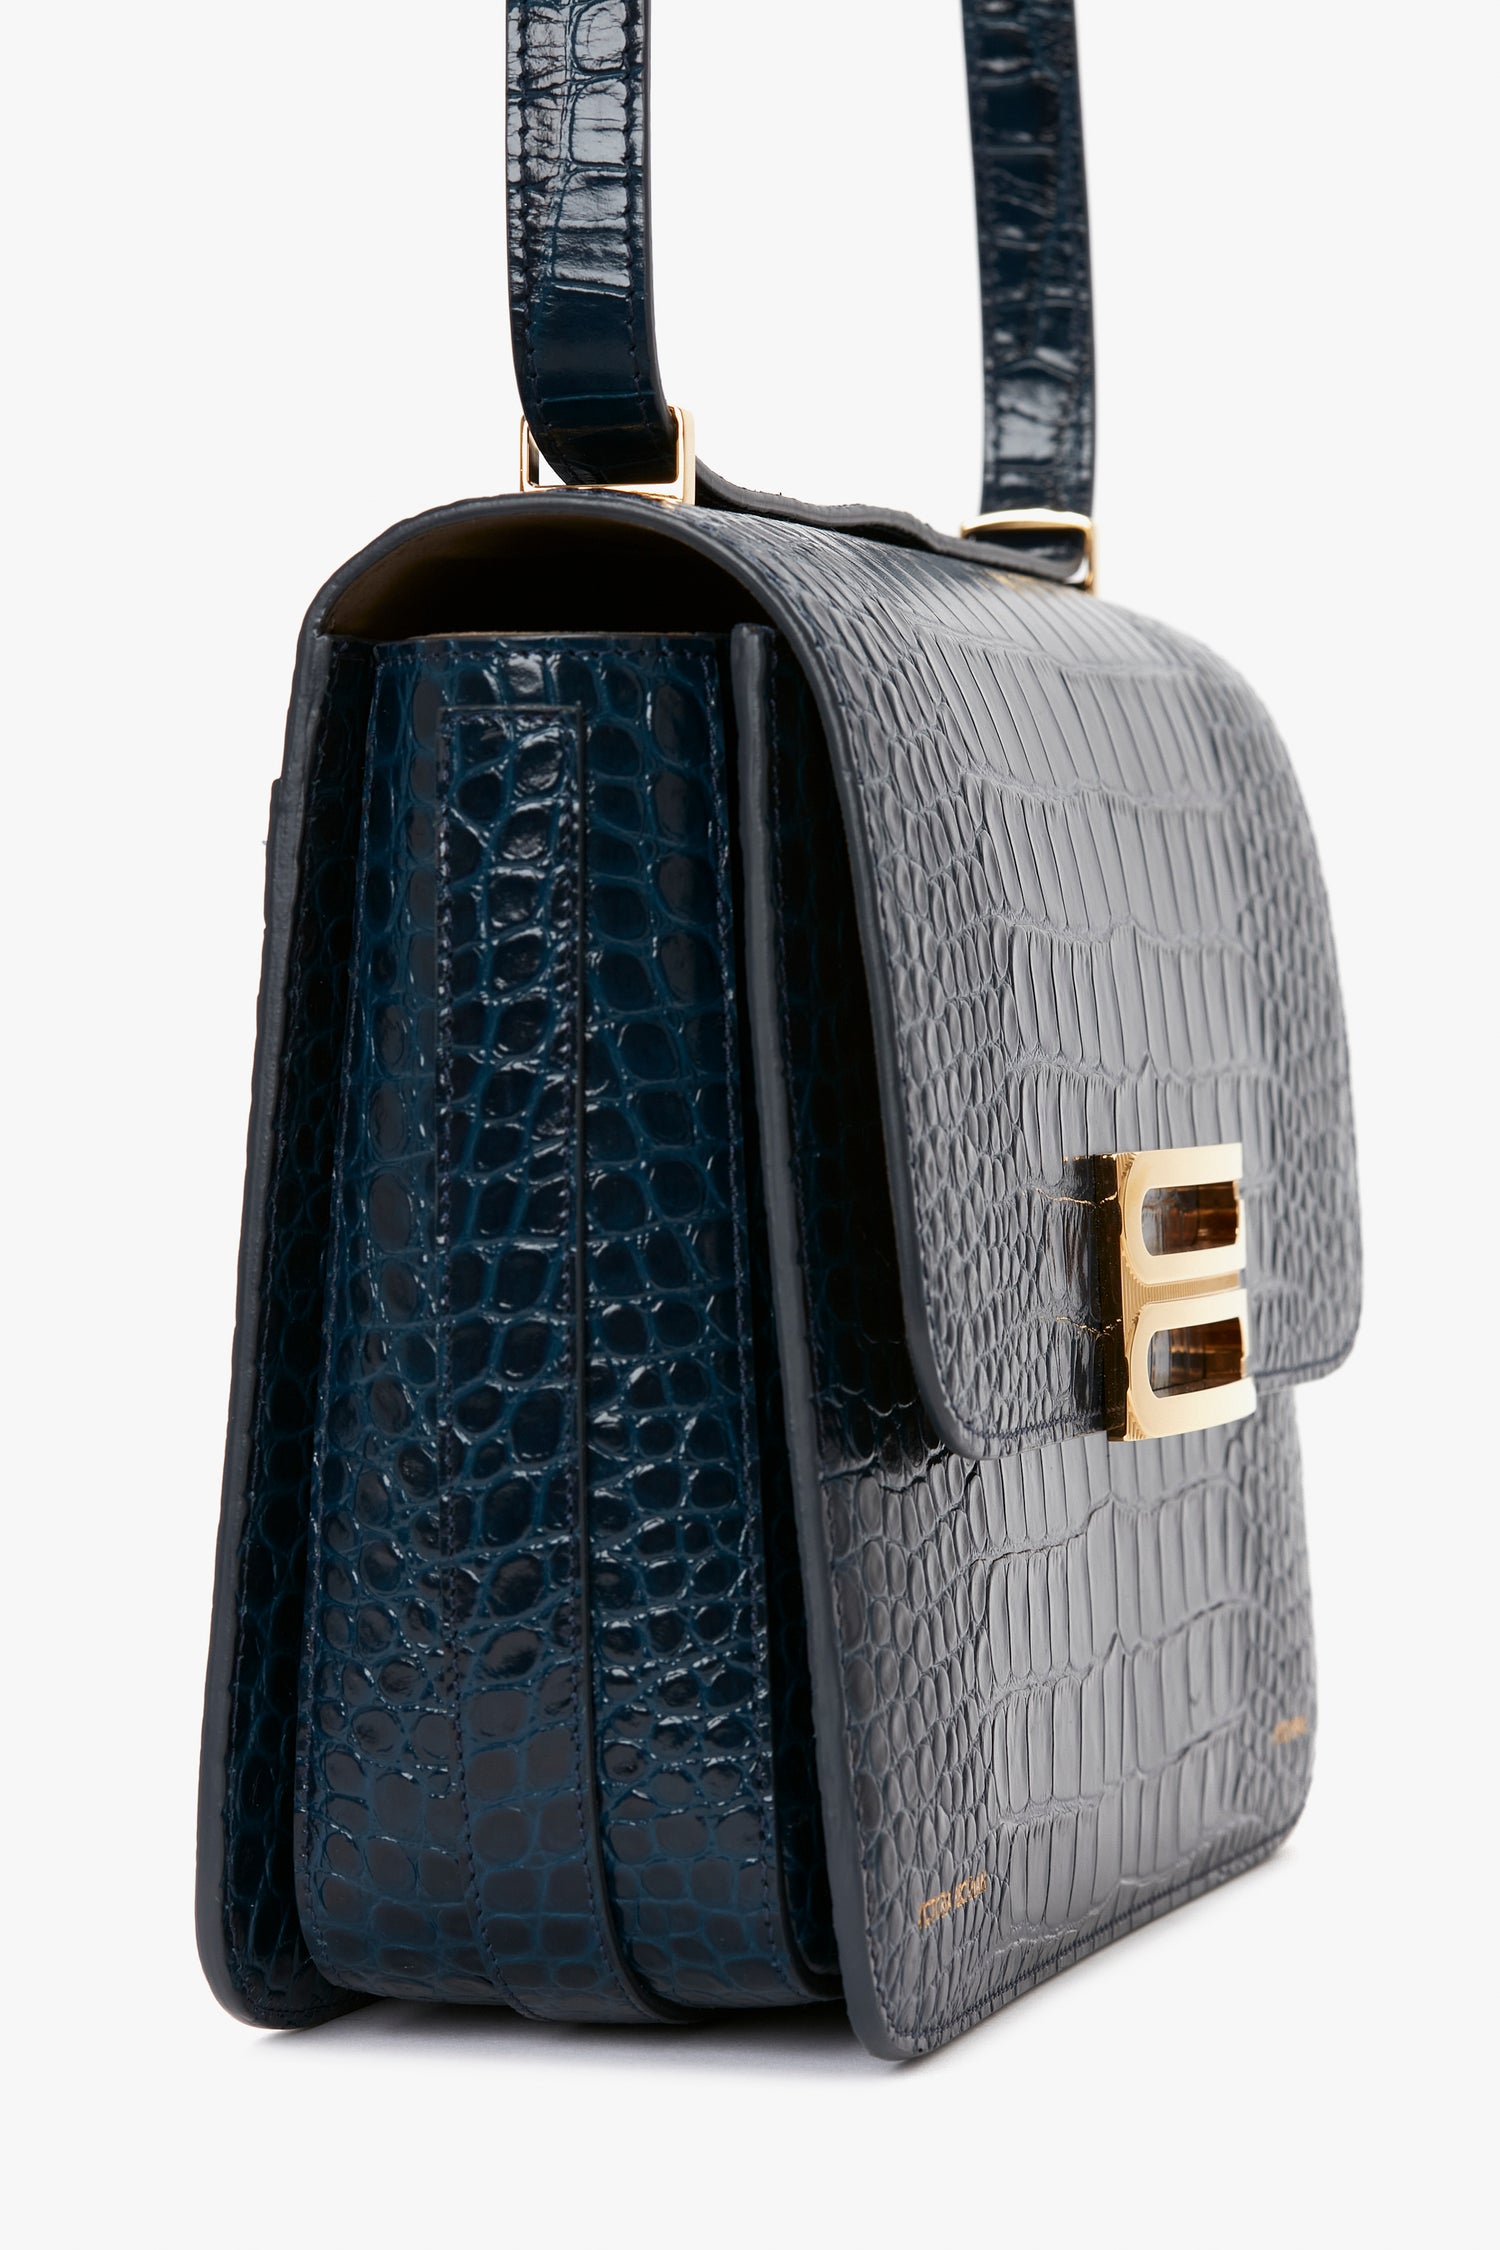 Amazon Brand - Eden & Ivy Women's Autumn-Winter '20 Handbag (Black) :  Amazon.in: Fashion